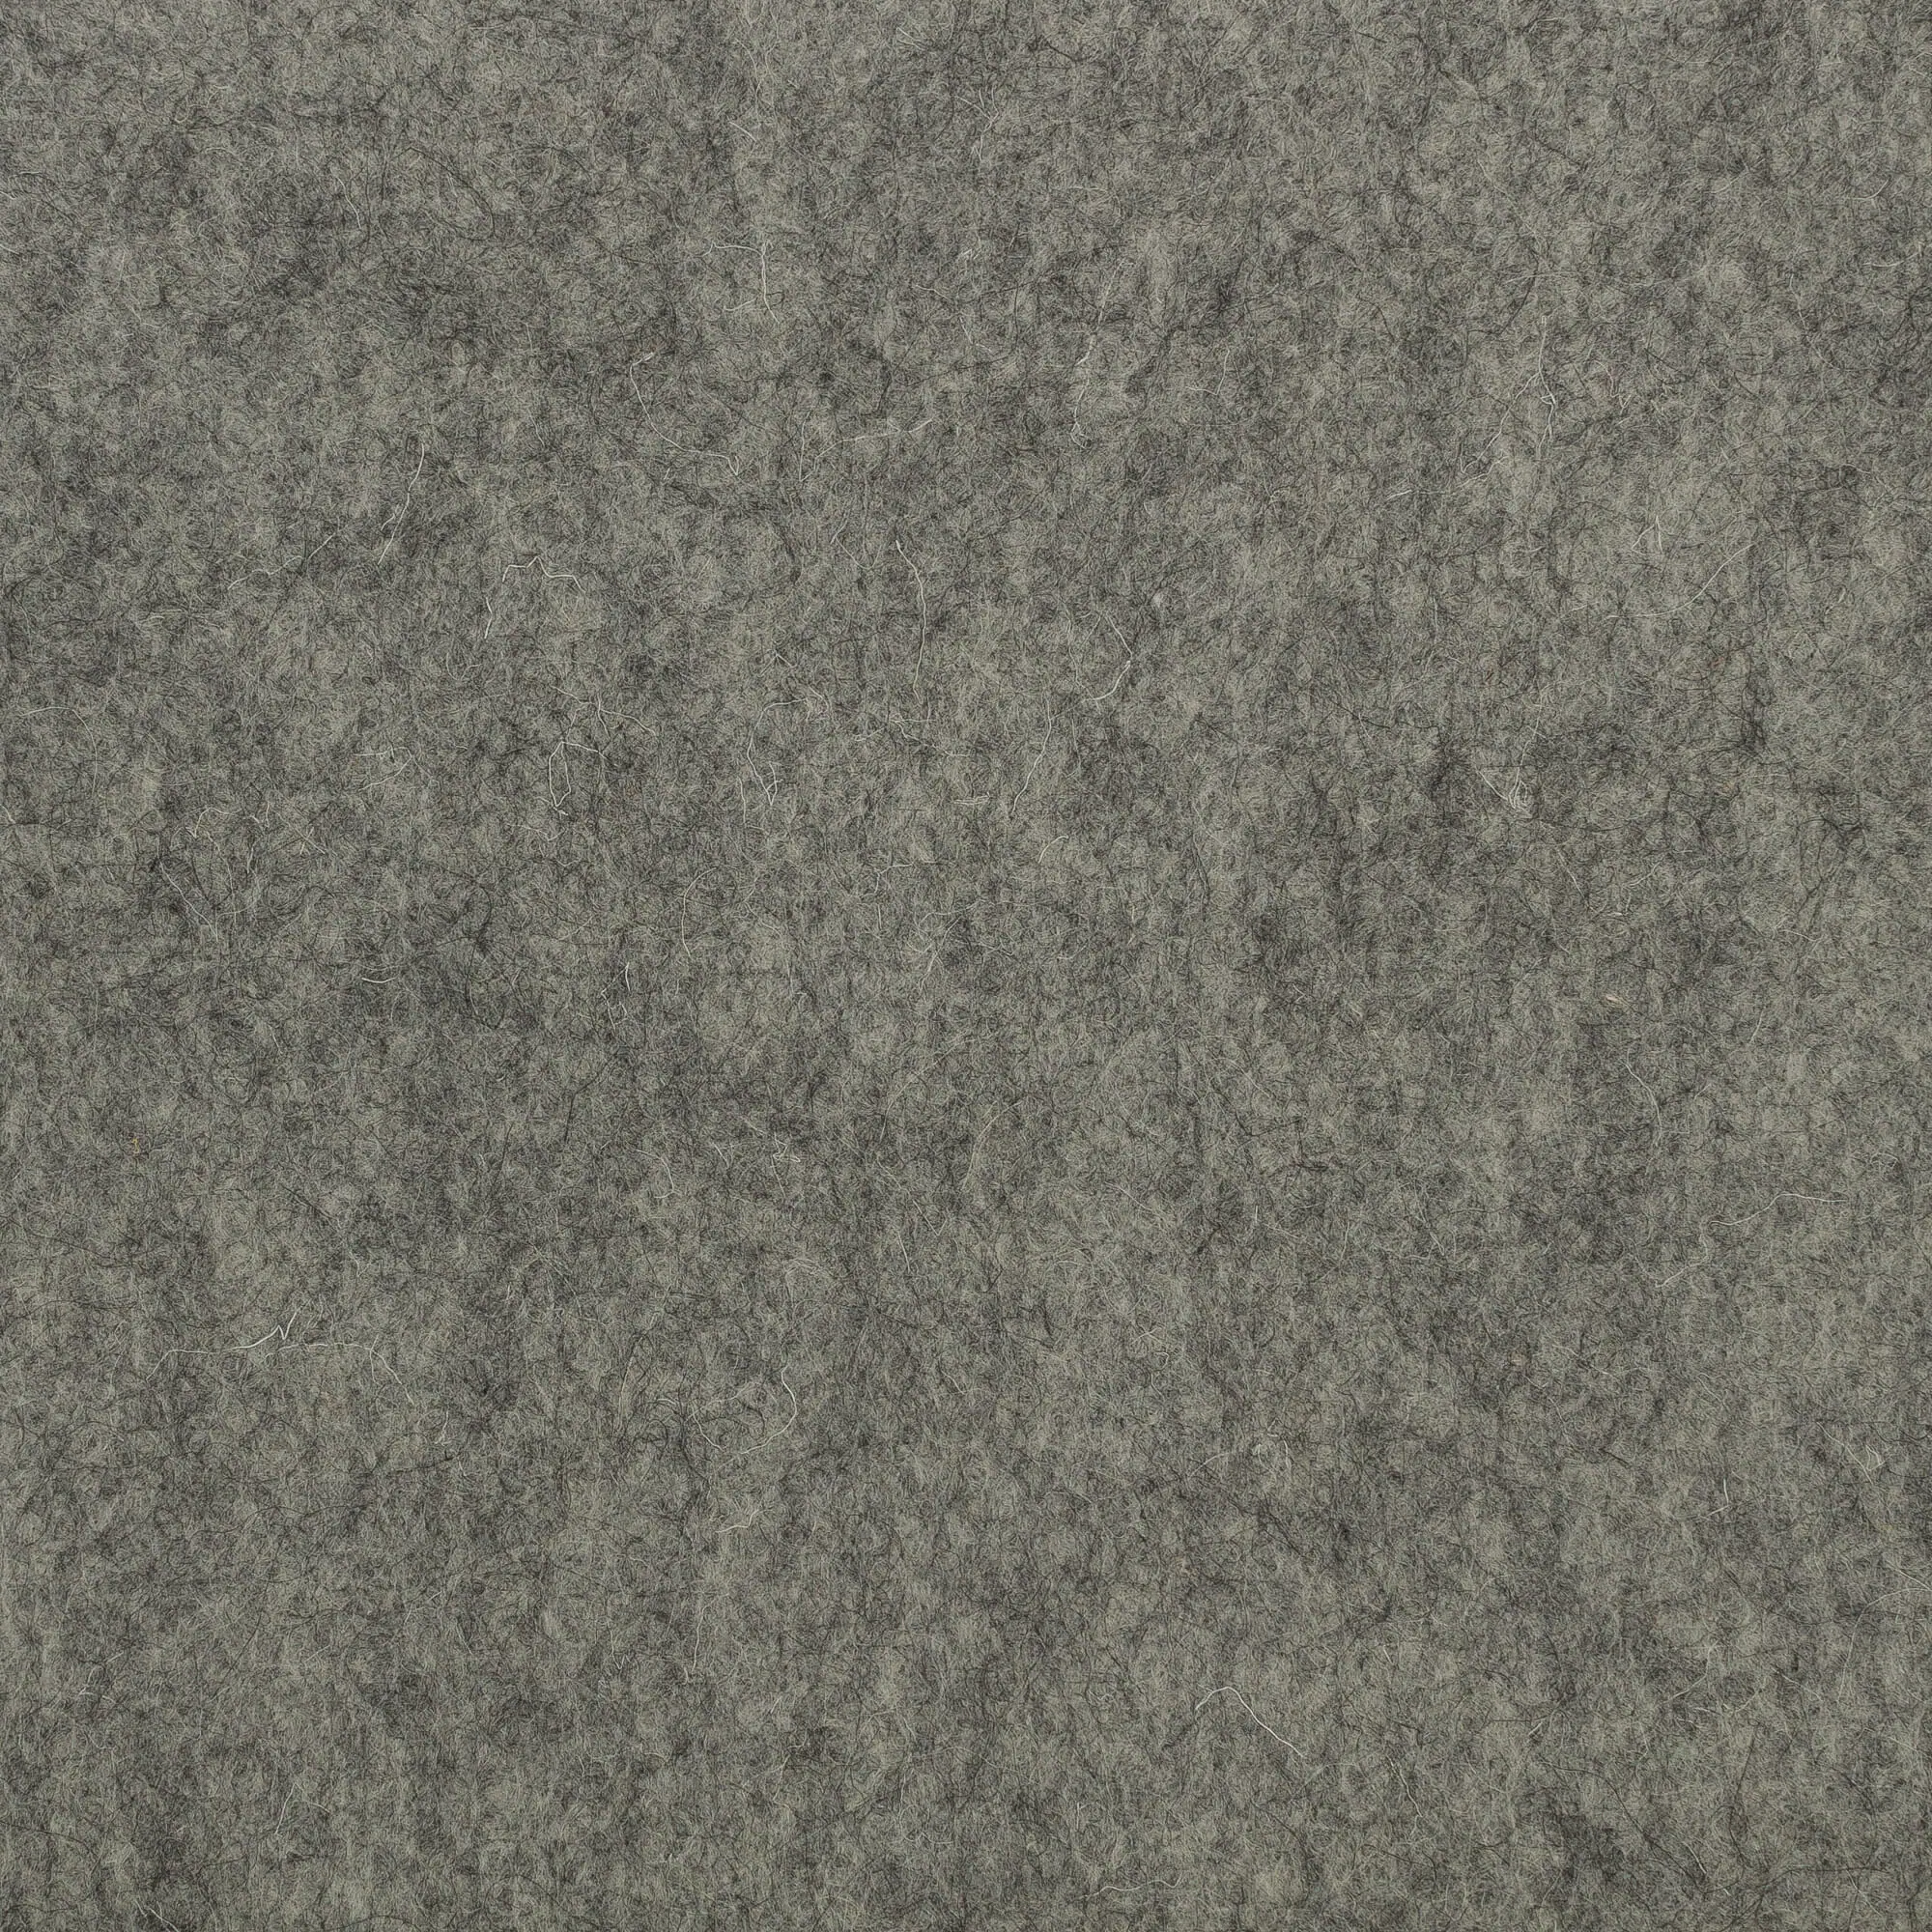 100% Wool Felt - Pure Wool Felt - Light Gray